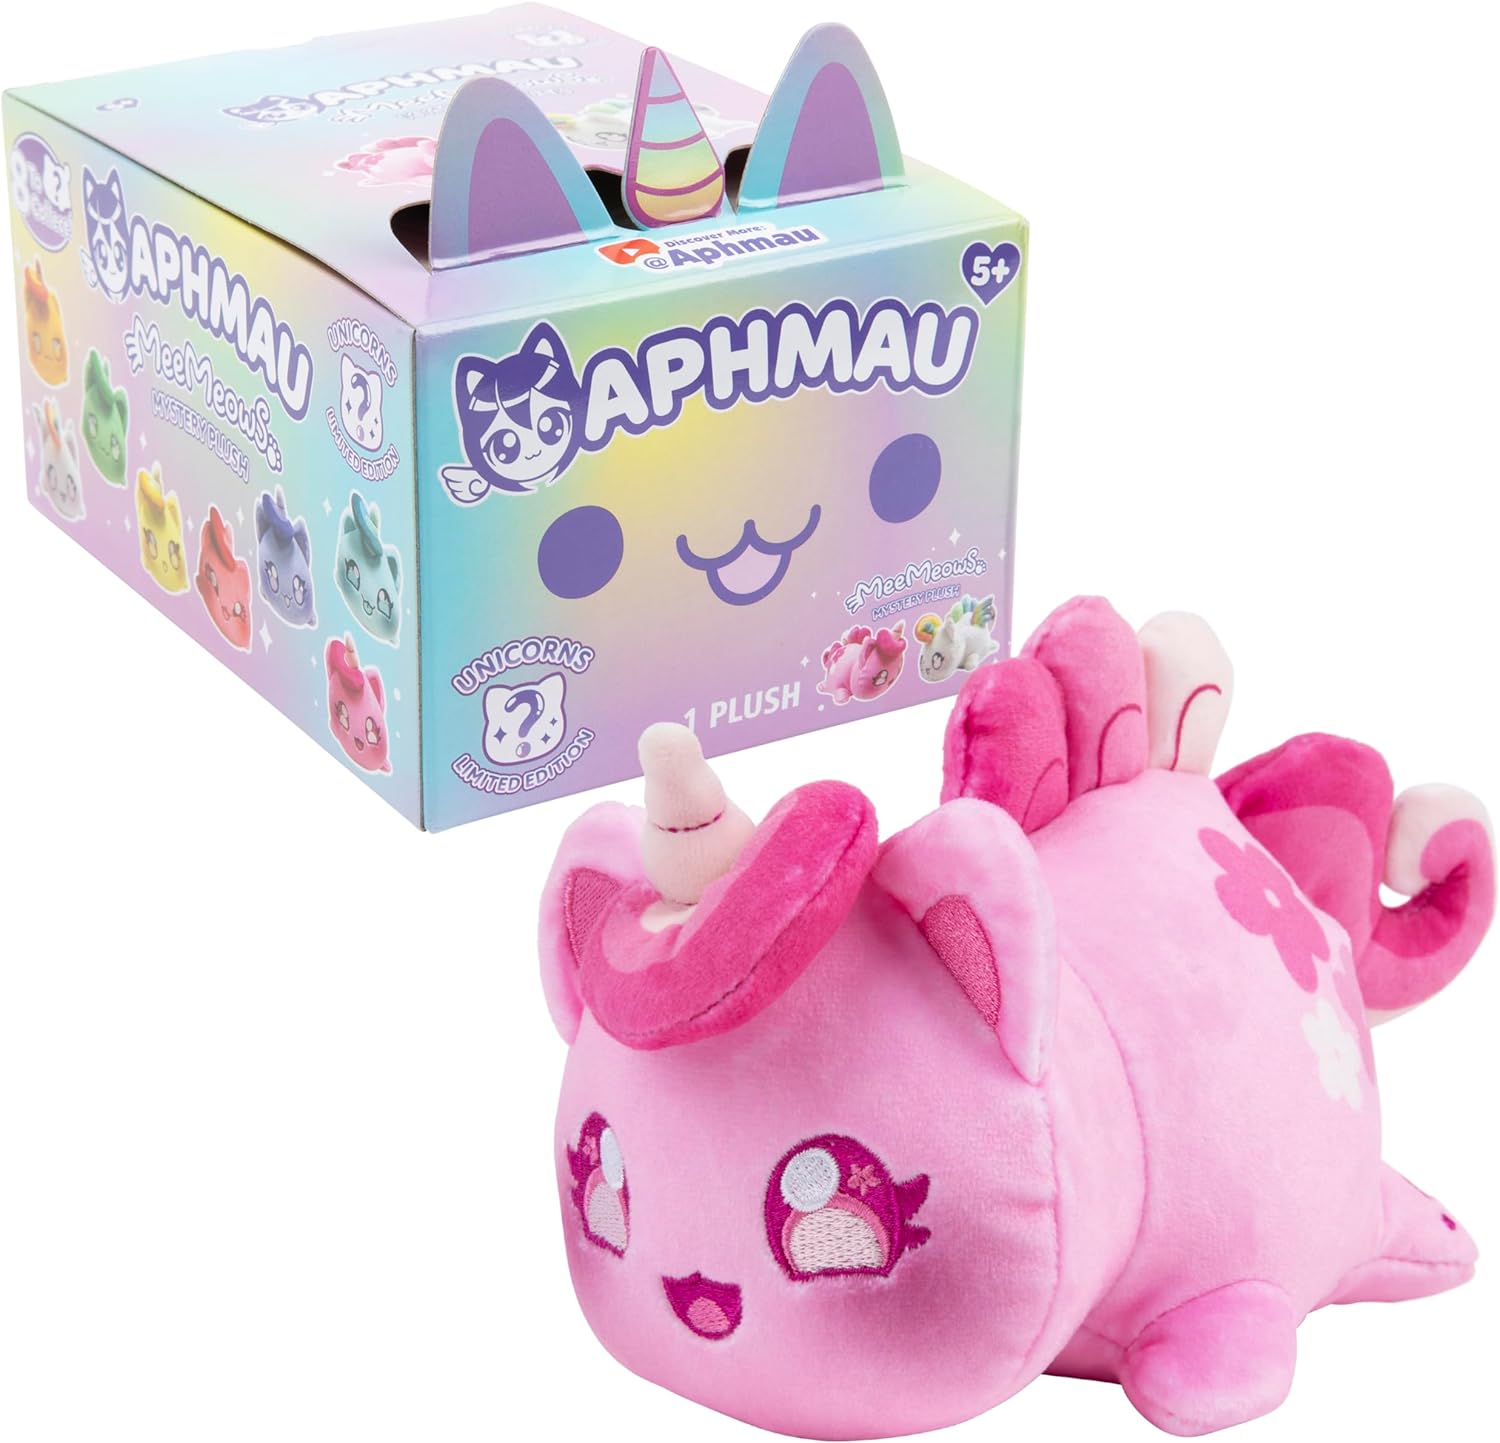 Aphmau Mystery Plush UNICORN Soft Plush Toy - one at random